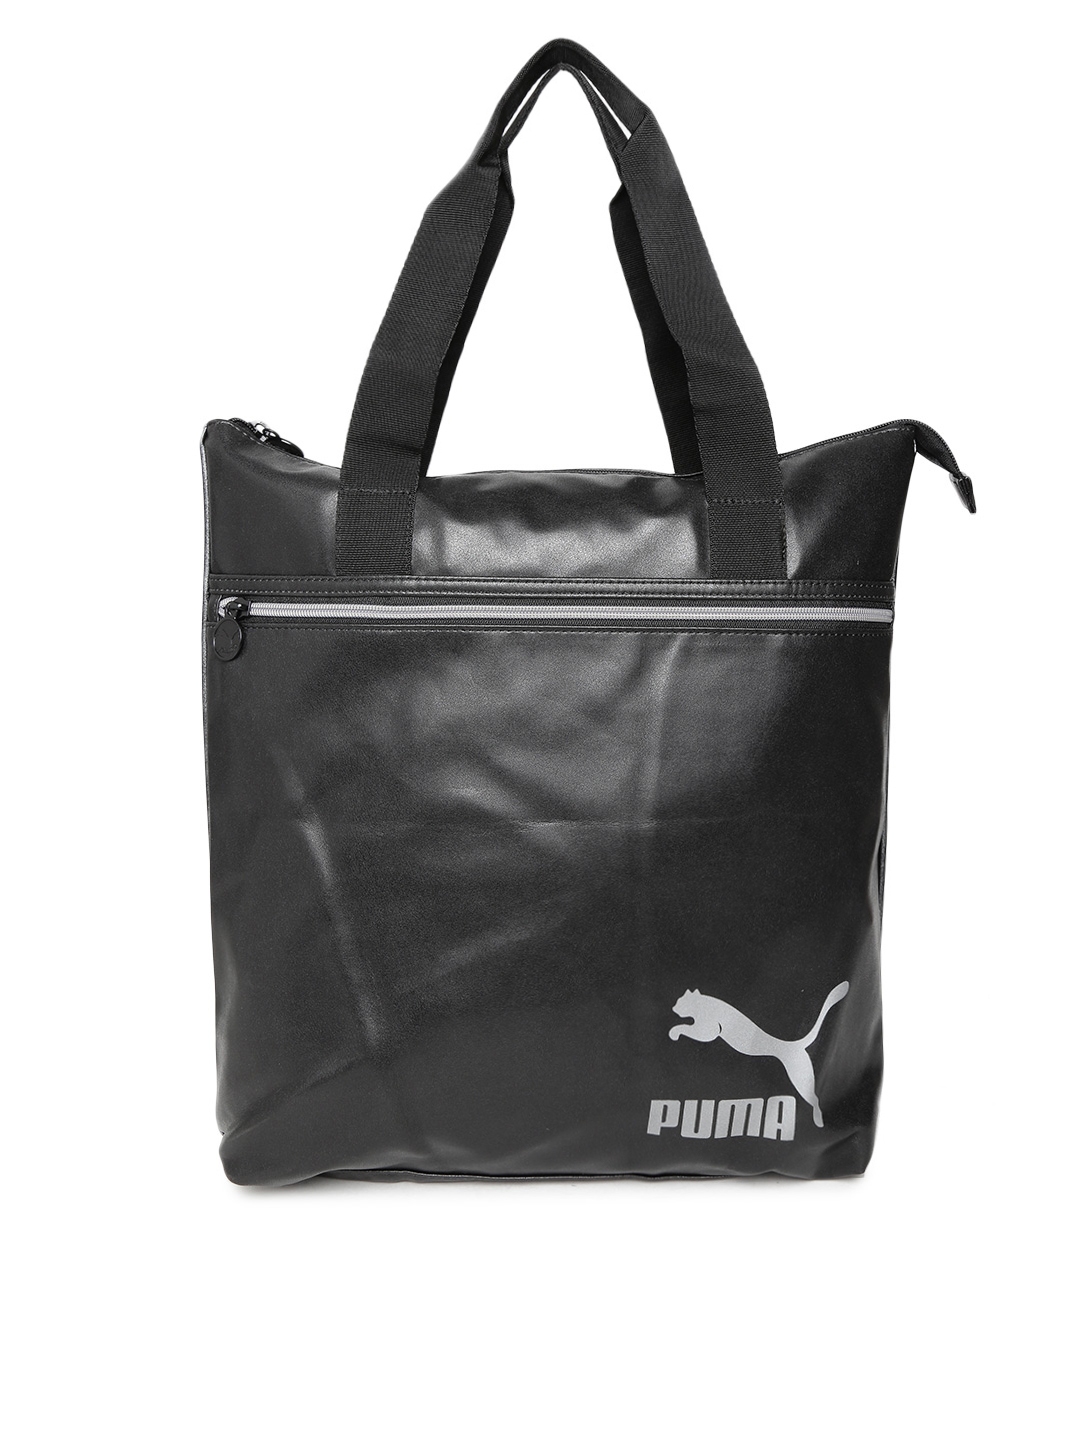 puma spirit bag